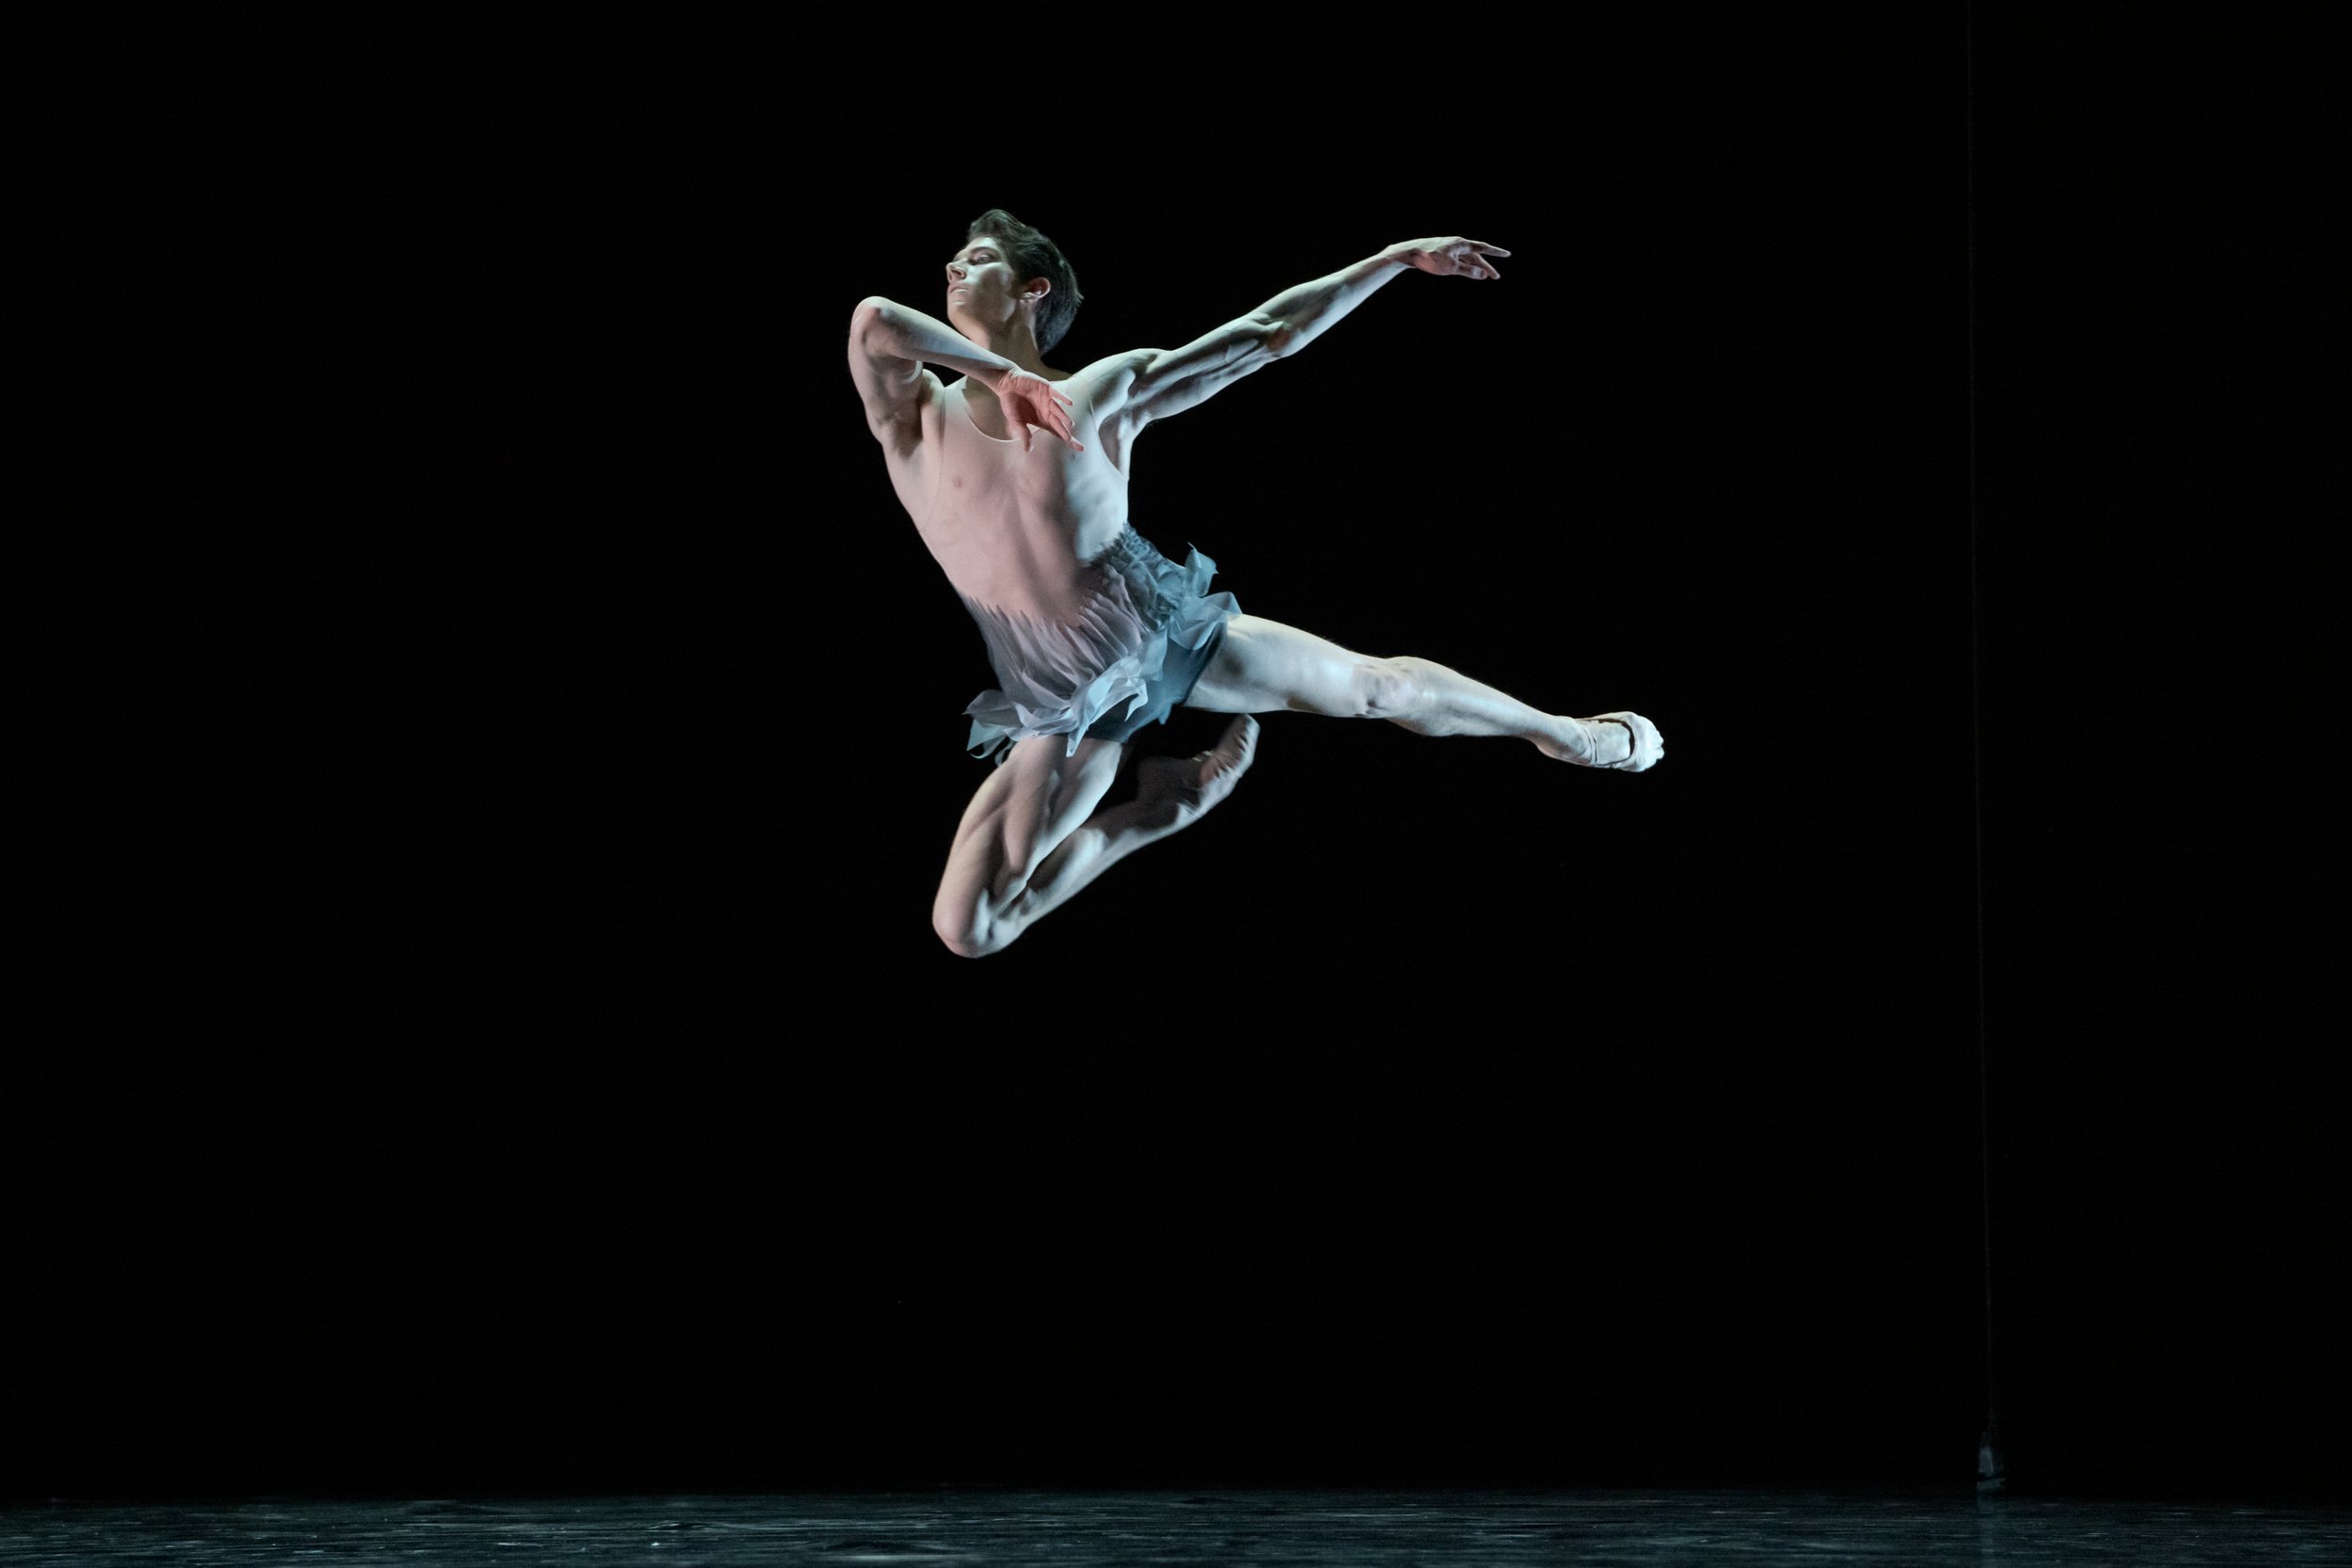  Brendan Saye in Skyward. Photo by Karolina Kuras, courtesy of The National Ballet of Canada. 